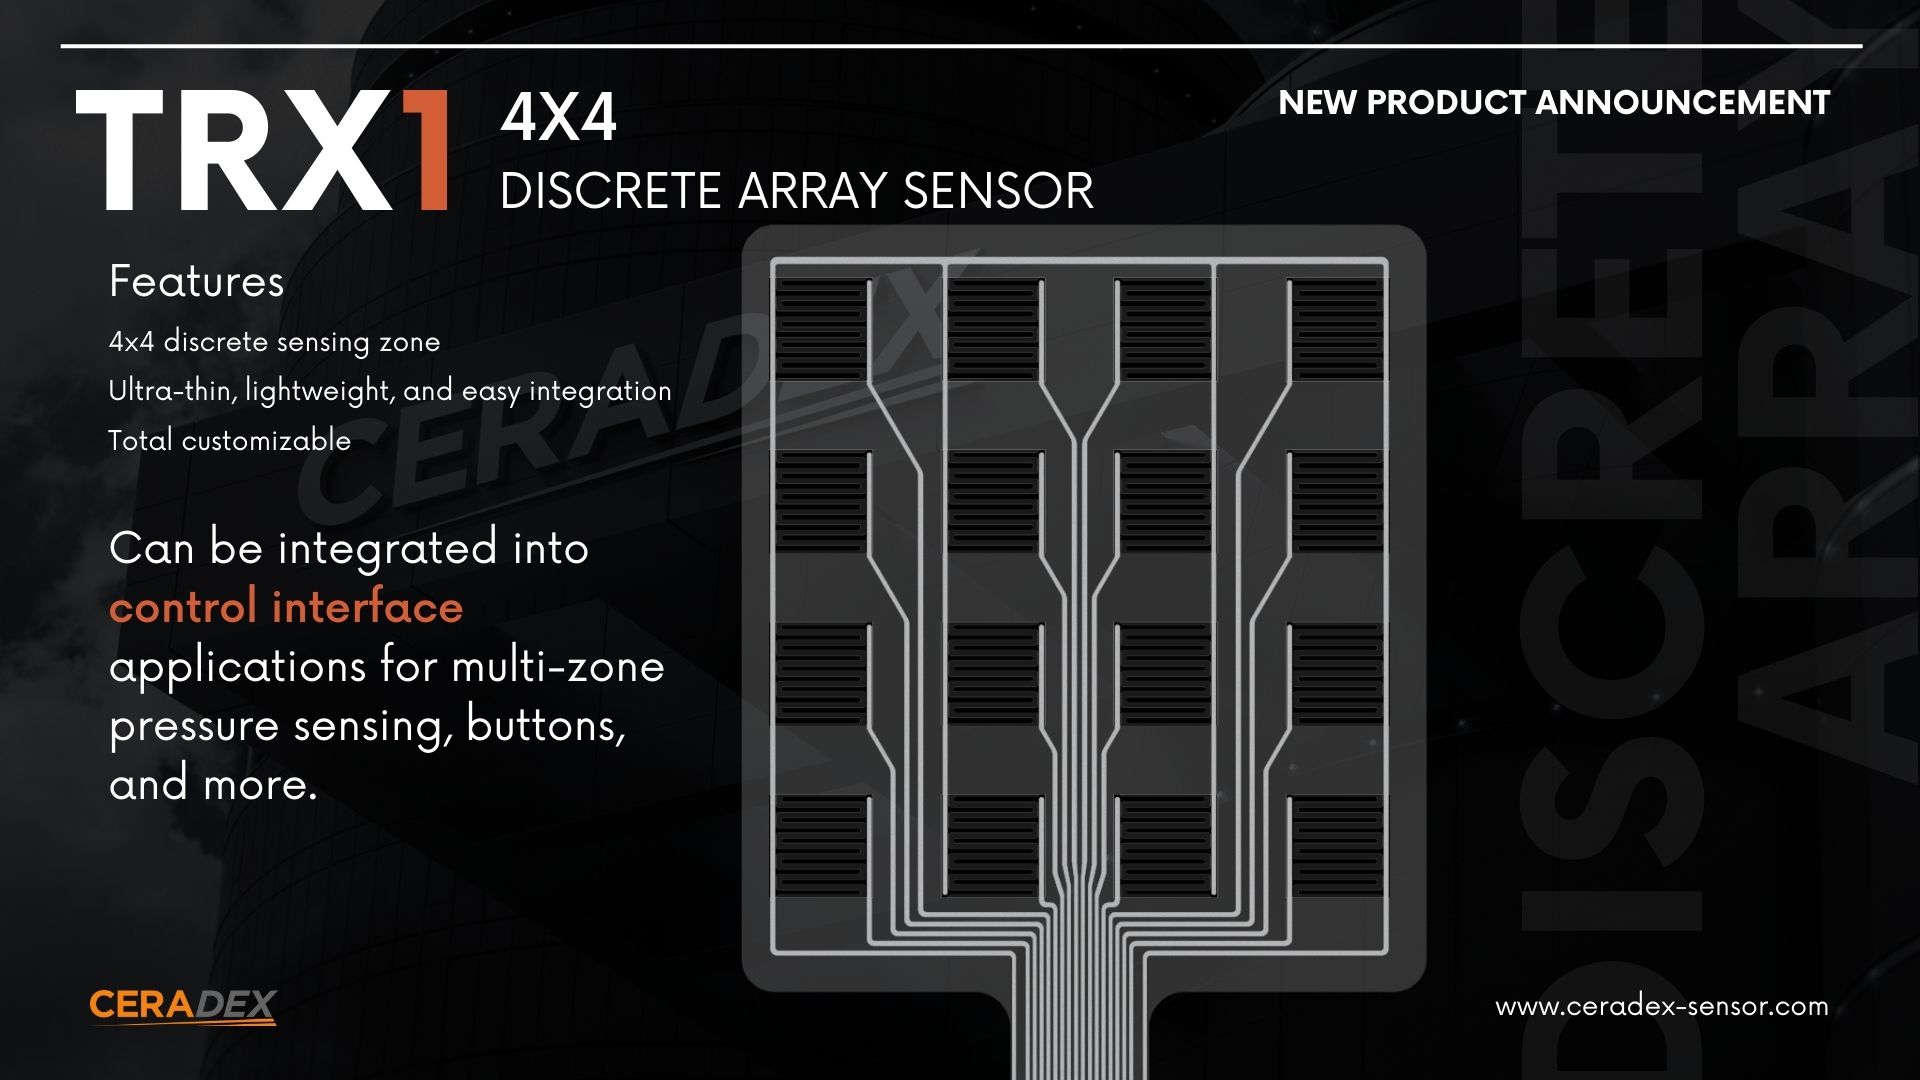 TRX1S discrete array sensor announcement